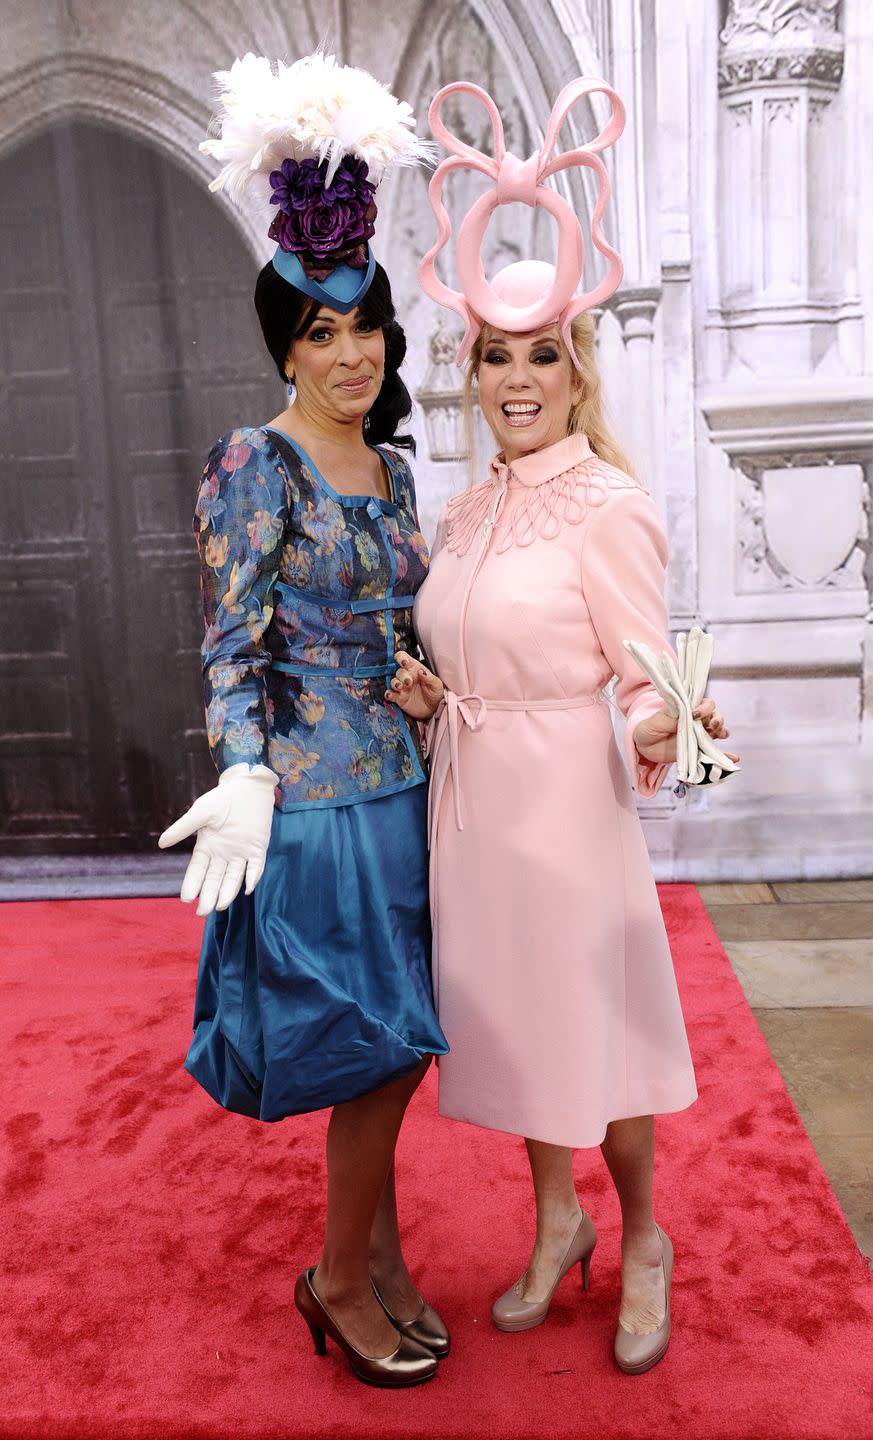 Hoda Kotb and Kathie Lee Gifford as Princess Eugenie and Princess Beatrice